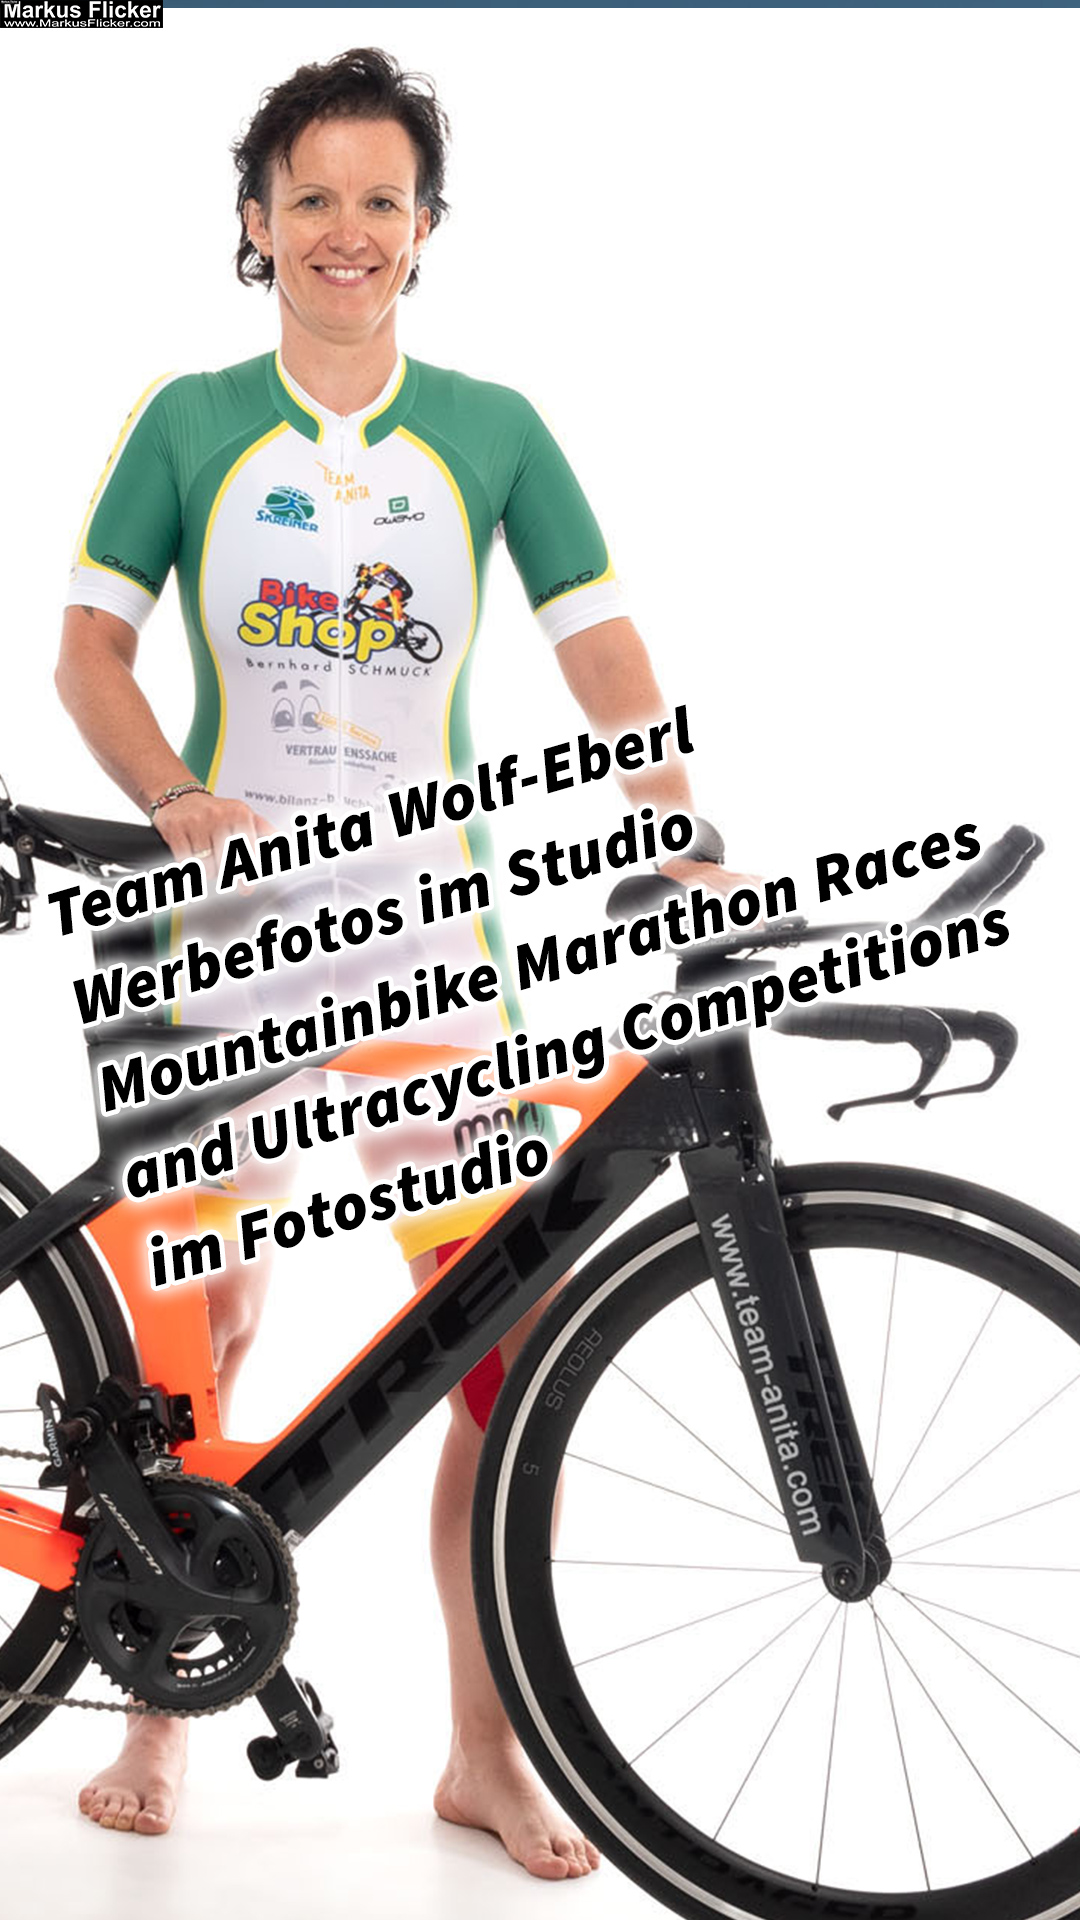 Team Anita Wolf-Eberl Werbefotos im Studio Mountainbike Marathon Races and Ultracycling Competitions im Fotostudio